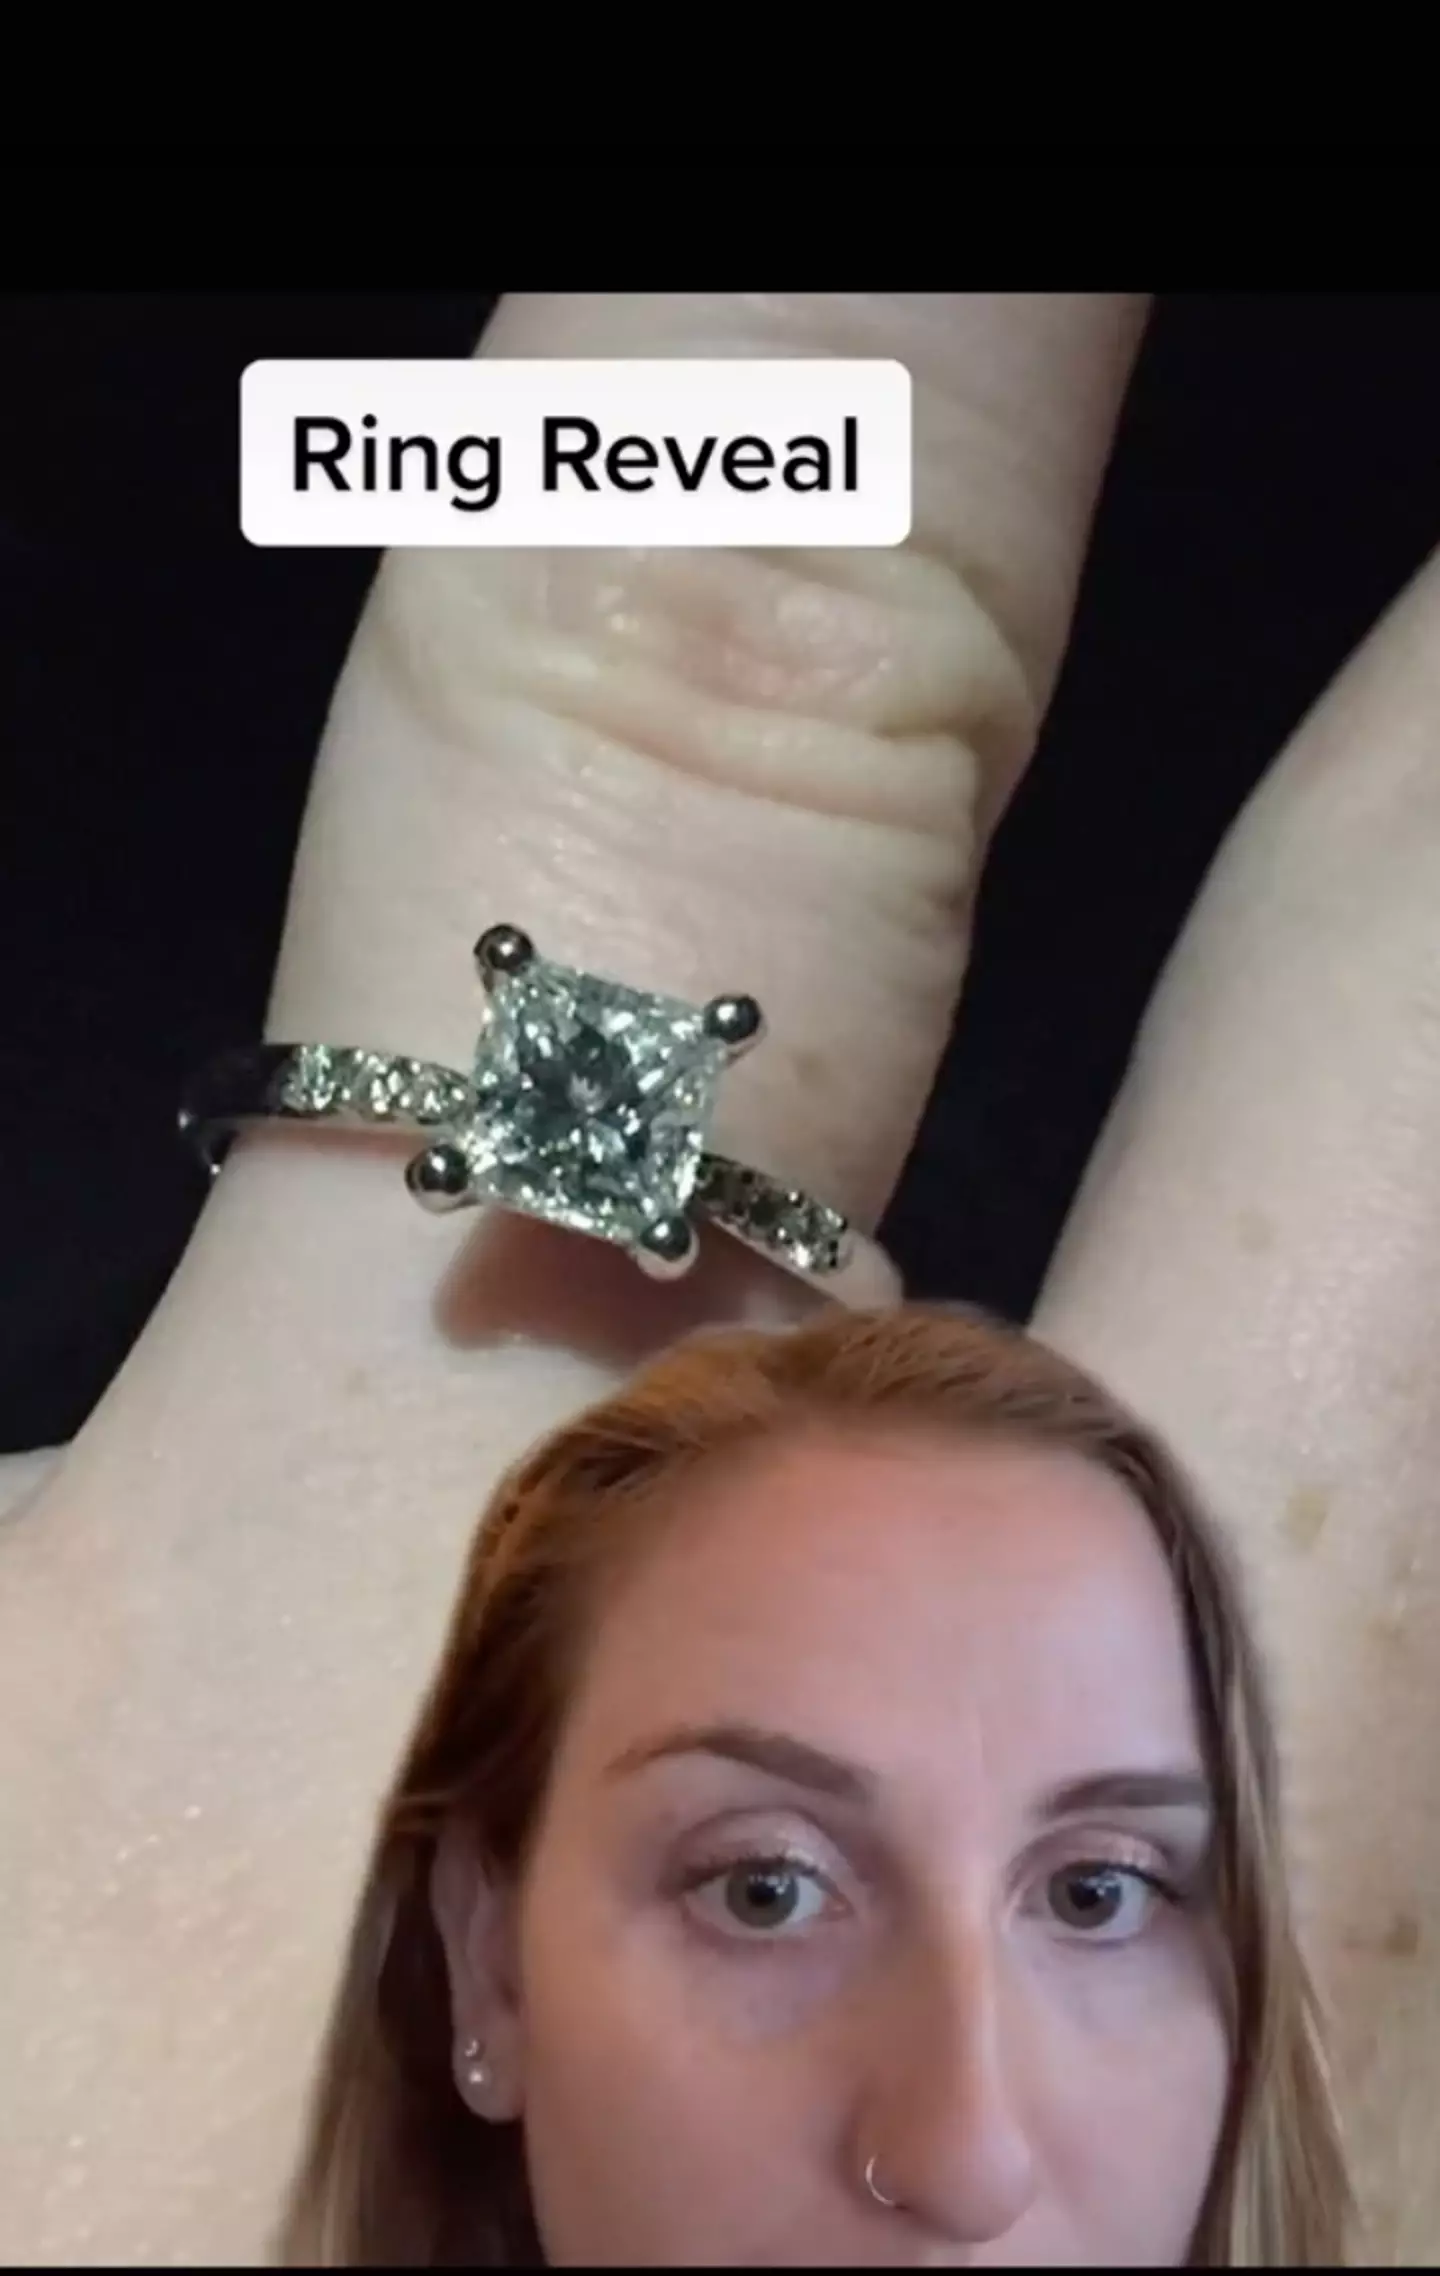 The original ring she wasn't a fan off (